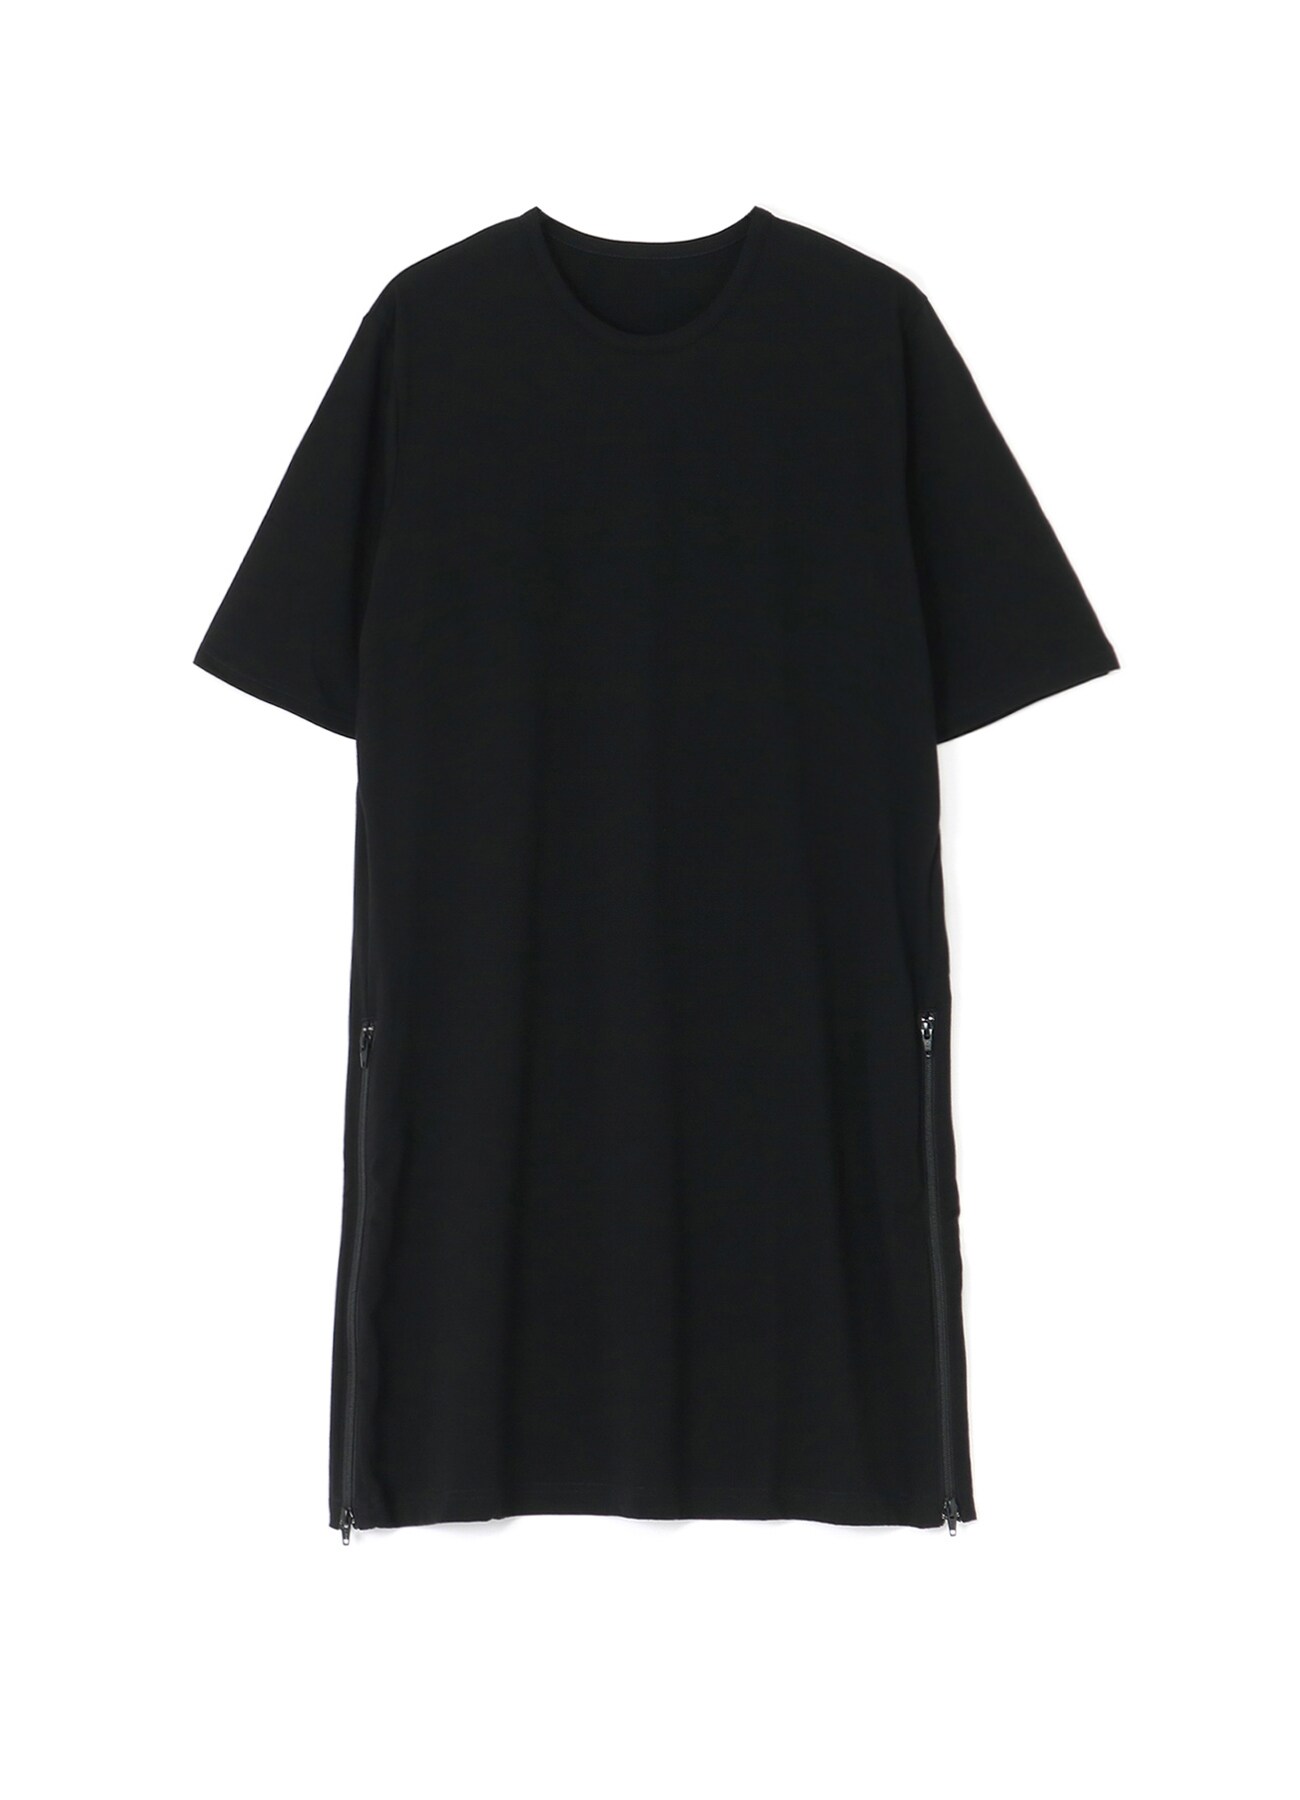 30/cotton jersey Side zipper short sleeves T